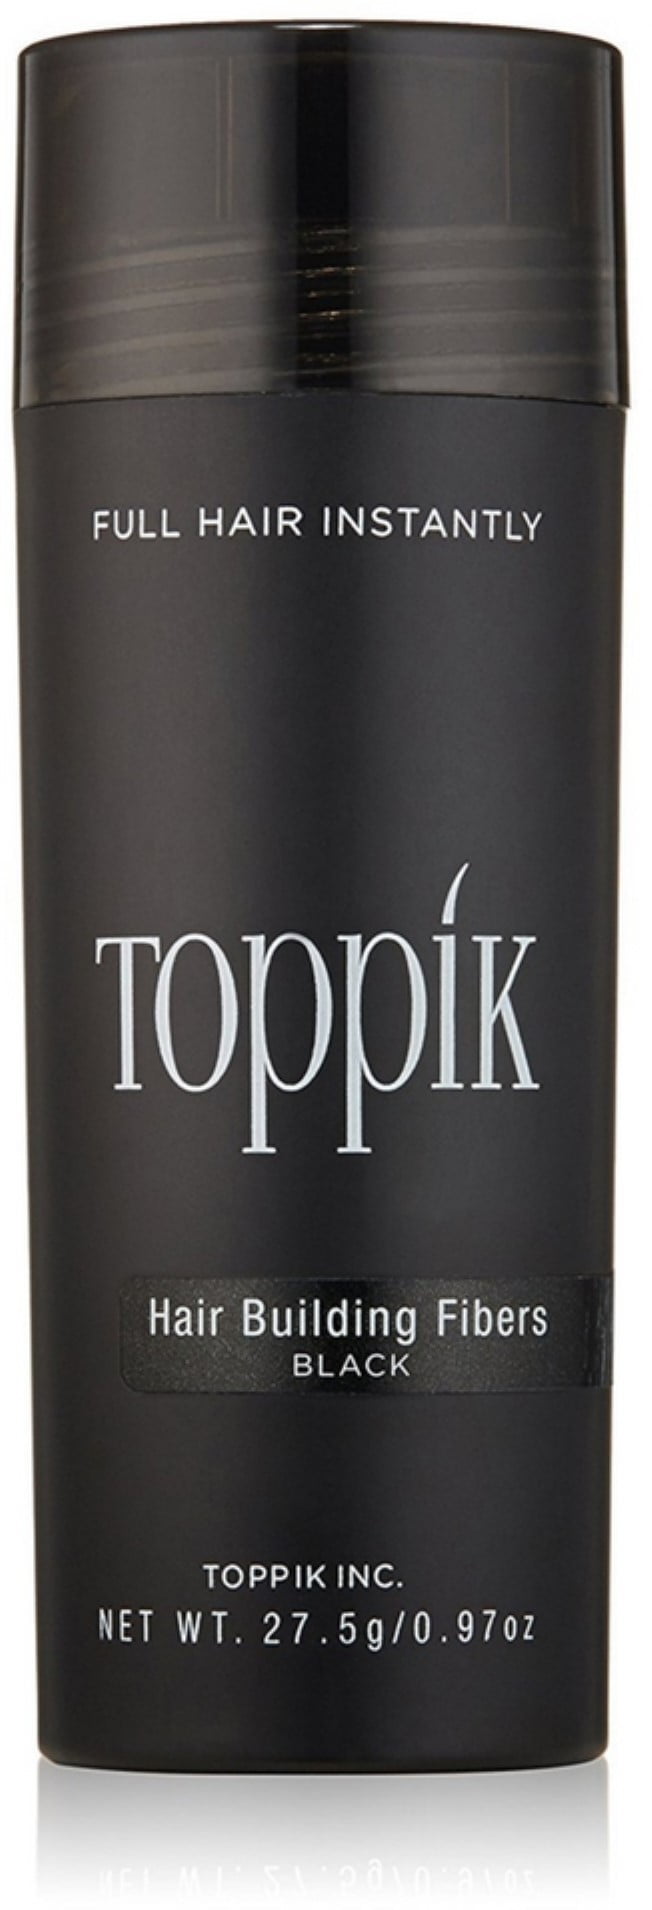 Toppik Hair Building Fibers, Black  oz (Pack of 2) 